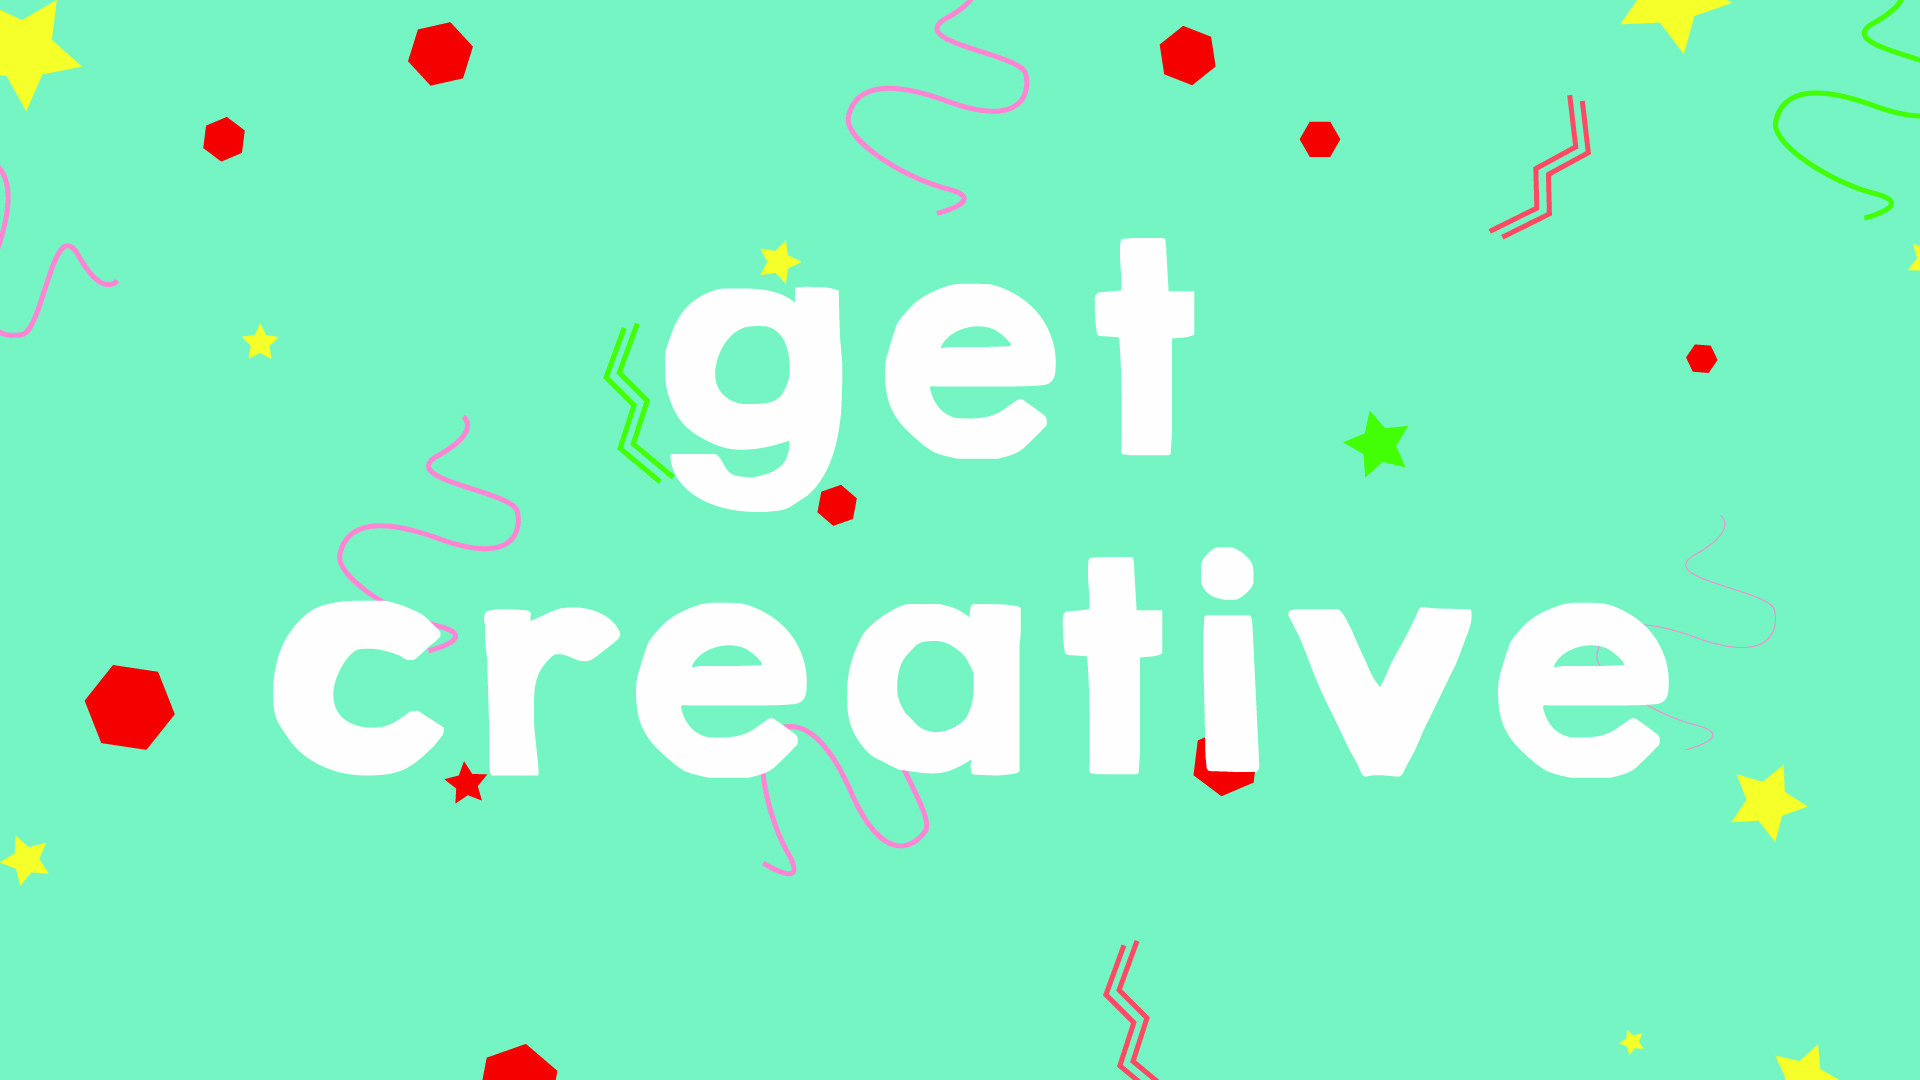 Get creative